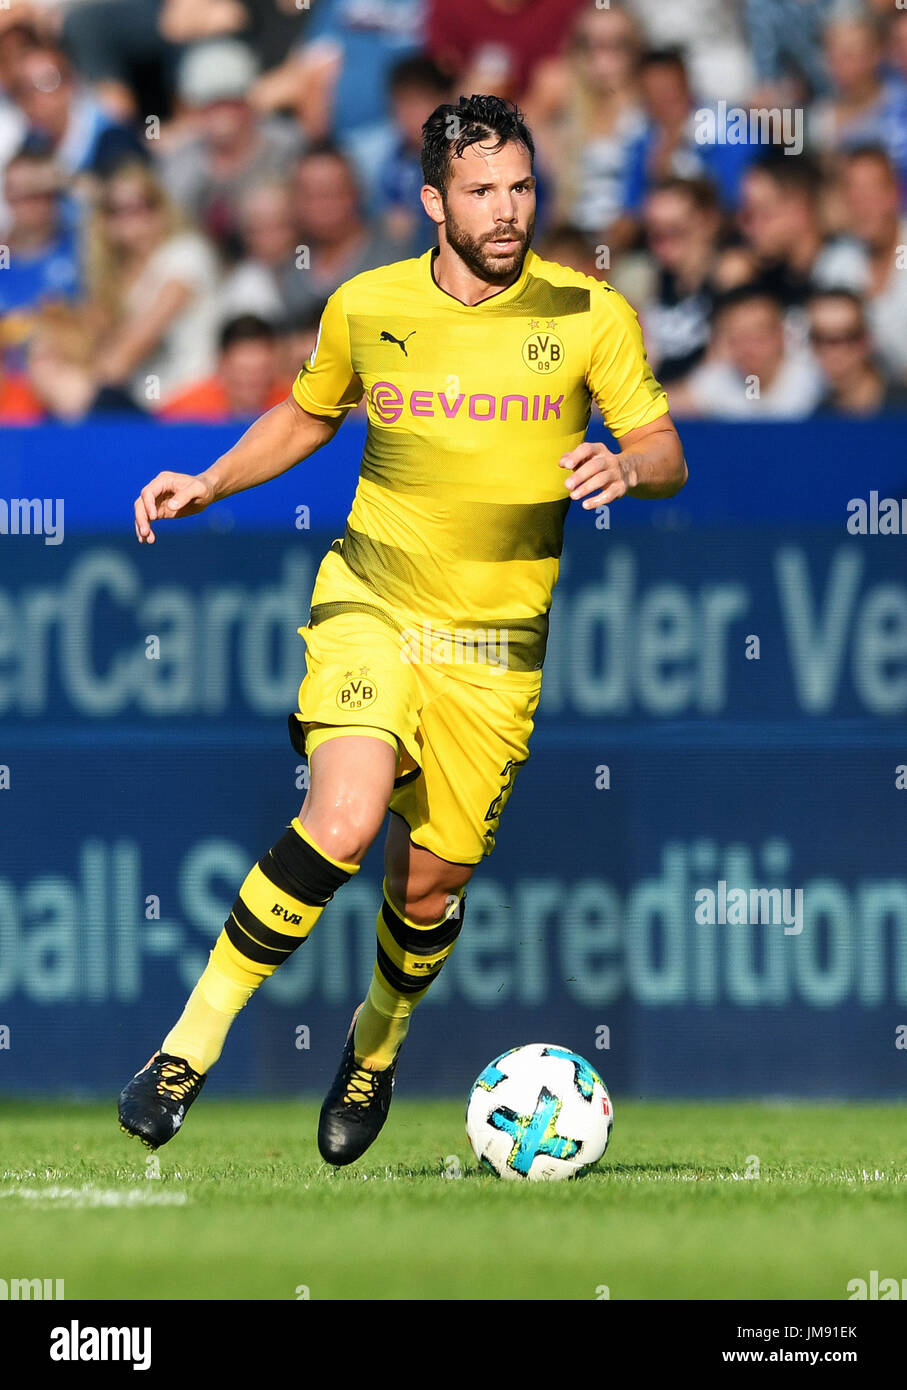 Freundschaftsspiel in Bochum: VfL Bochum Vs Borussia Dortmund; Gonzalo Castro aus Dortmund. Stockfoto